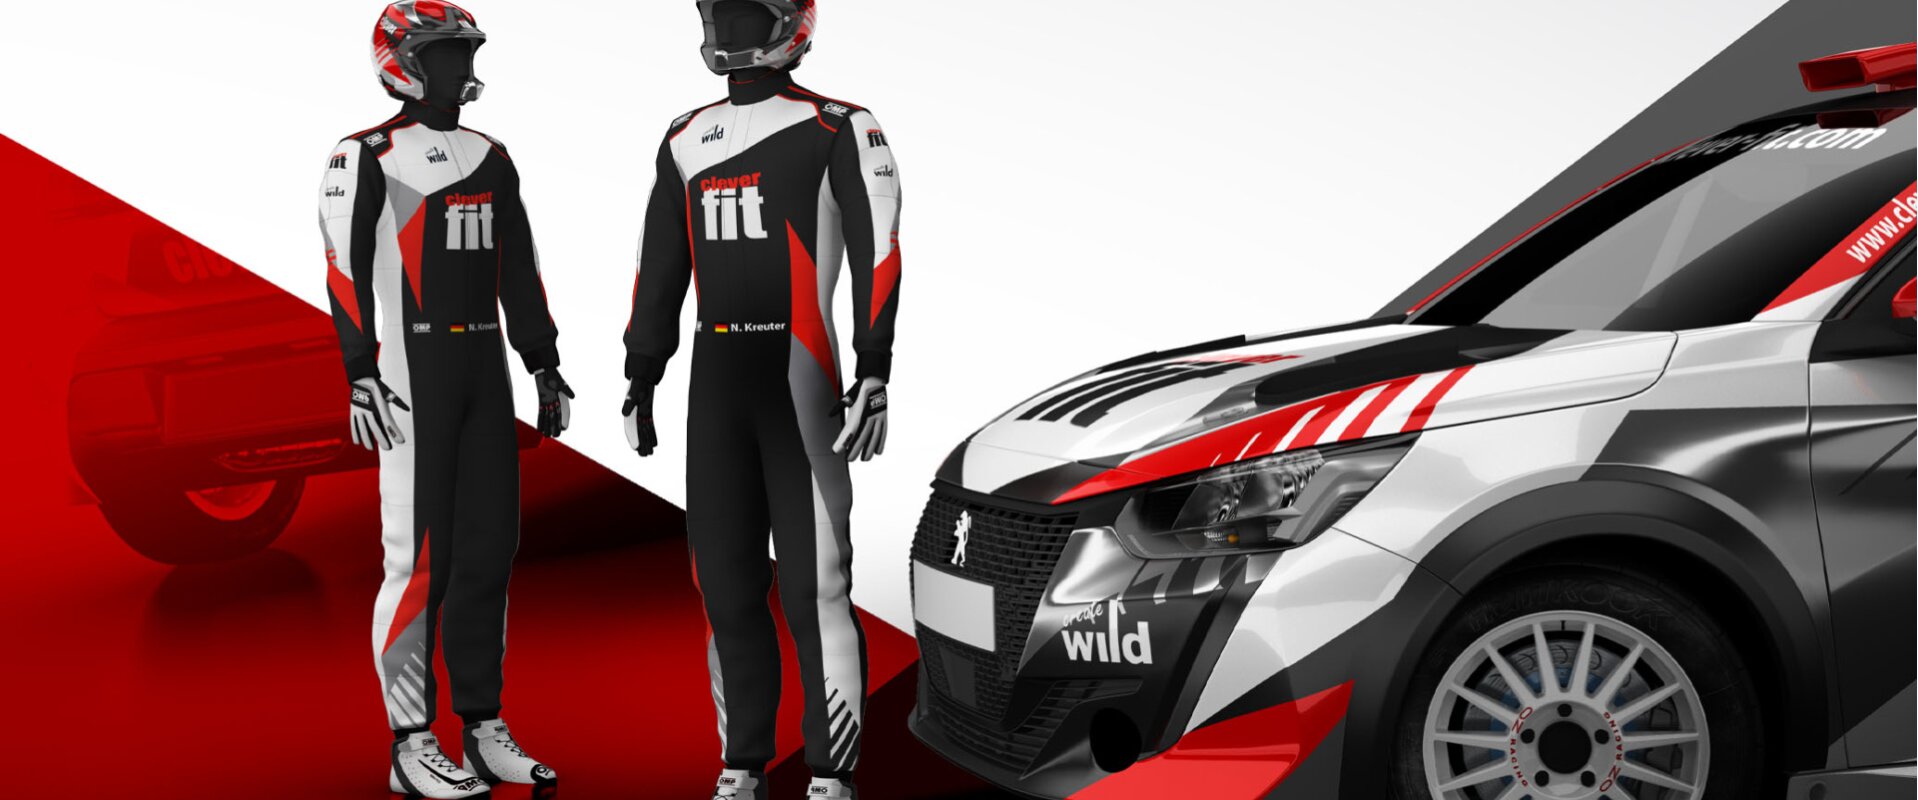 black, white and red color design motorsport suit